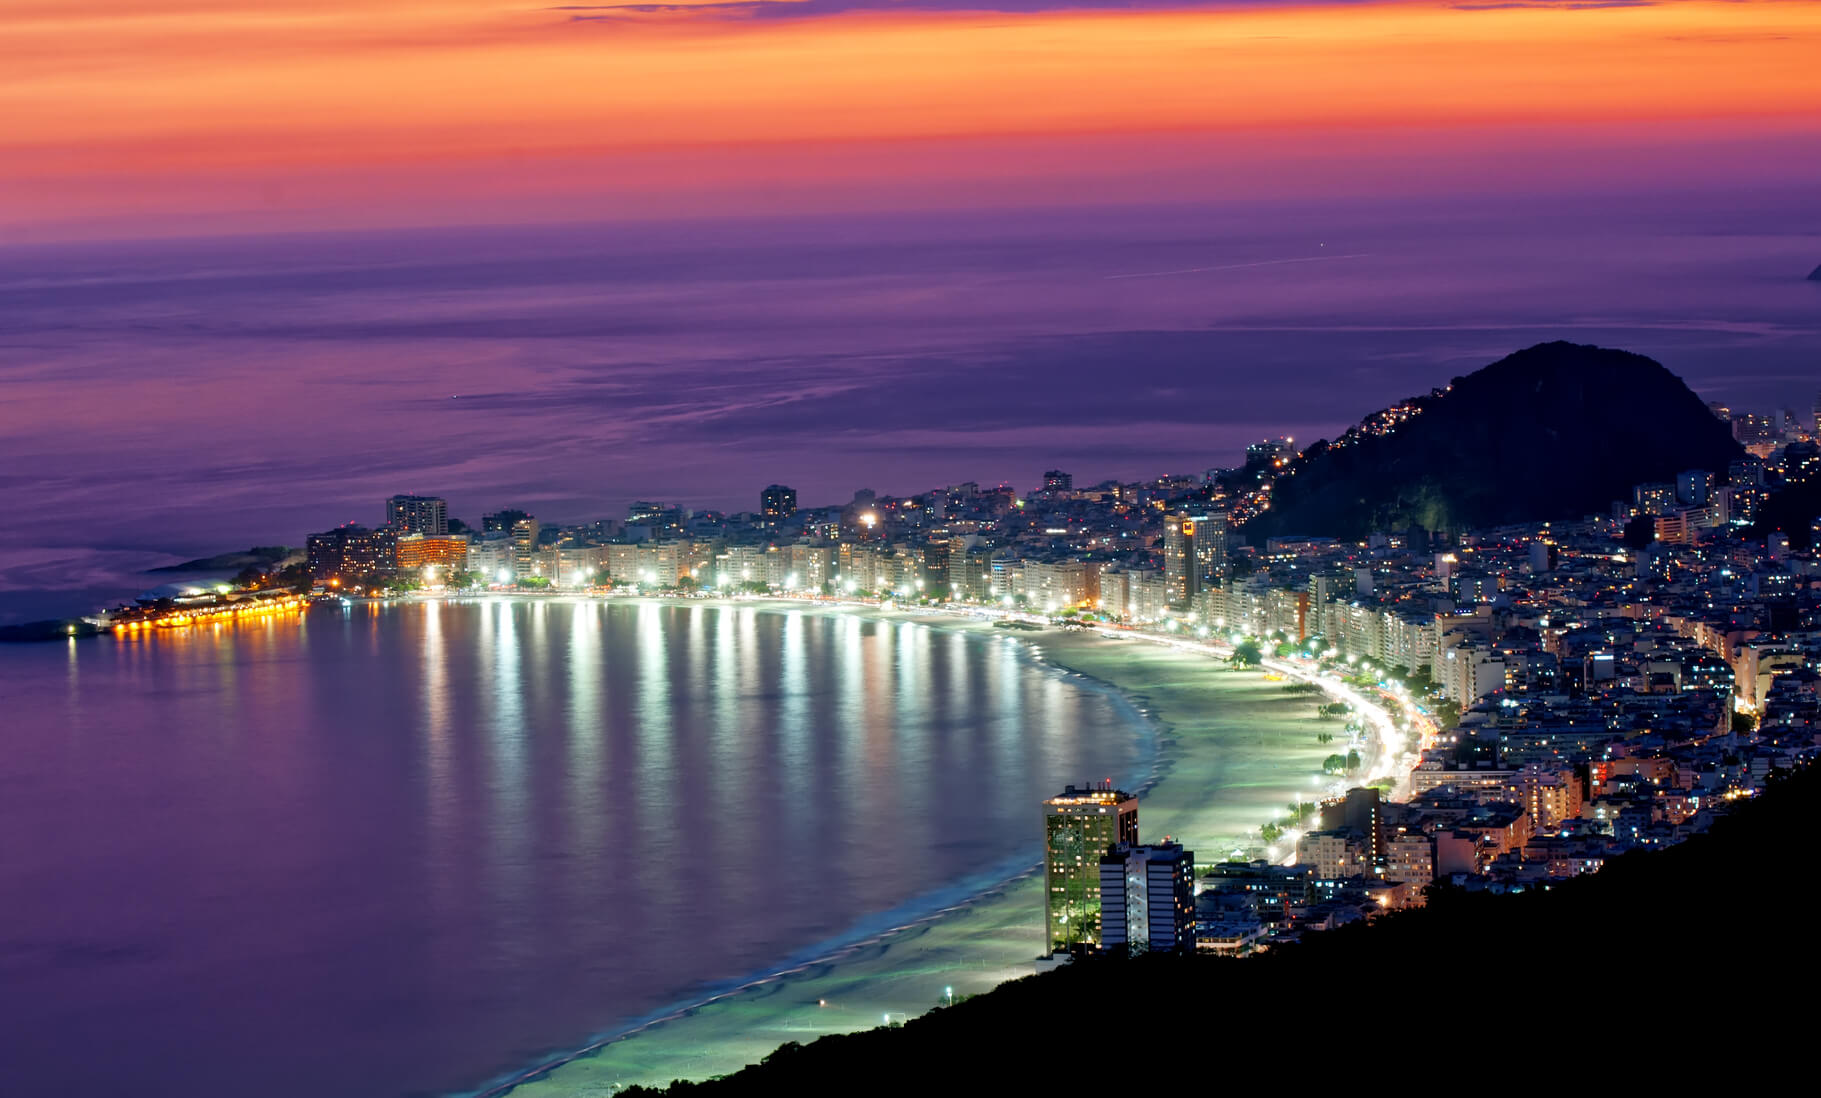 Flight deals from Milan or Rome, Italy to Rio De Janeiro, Brazil | Secret Flying